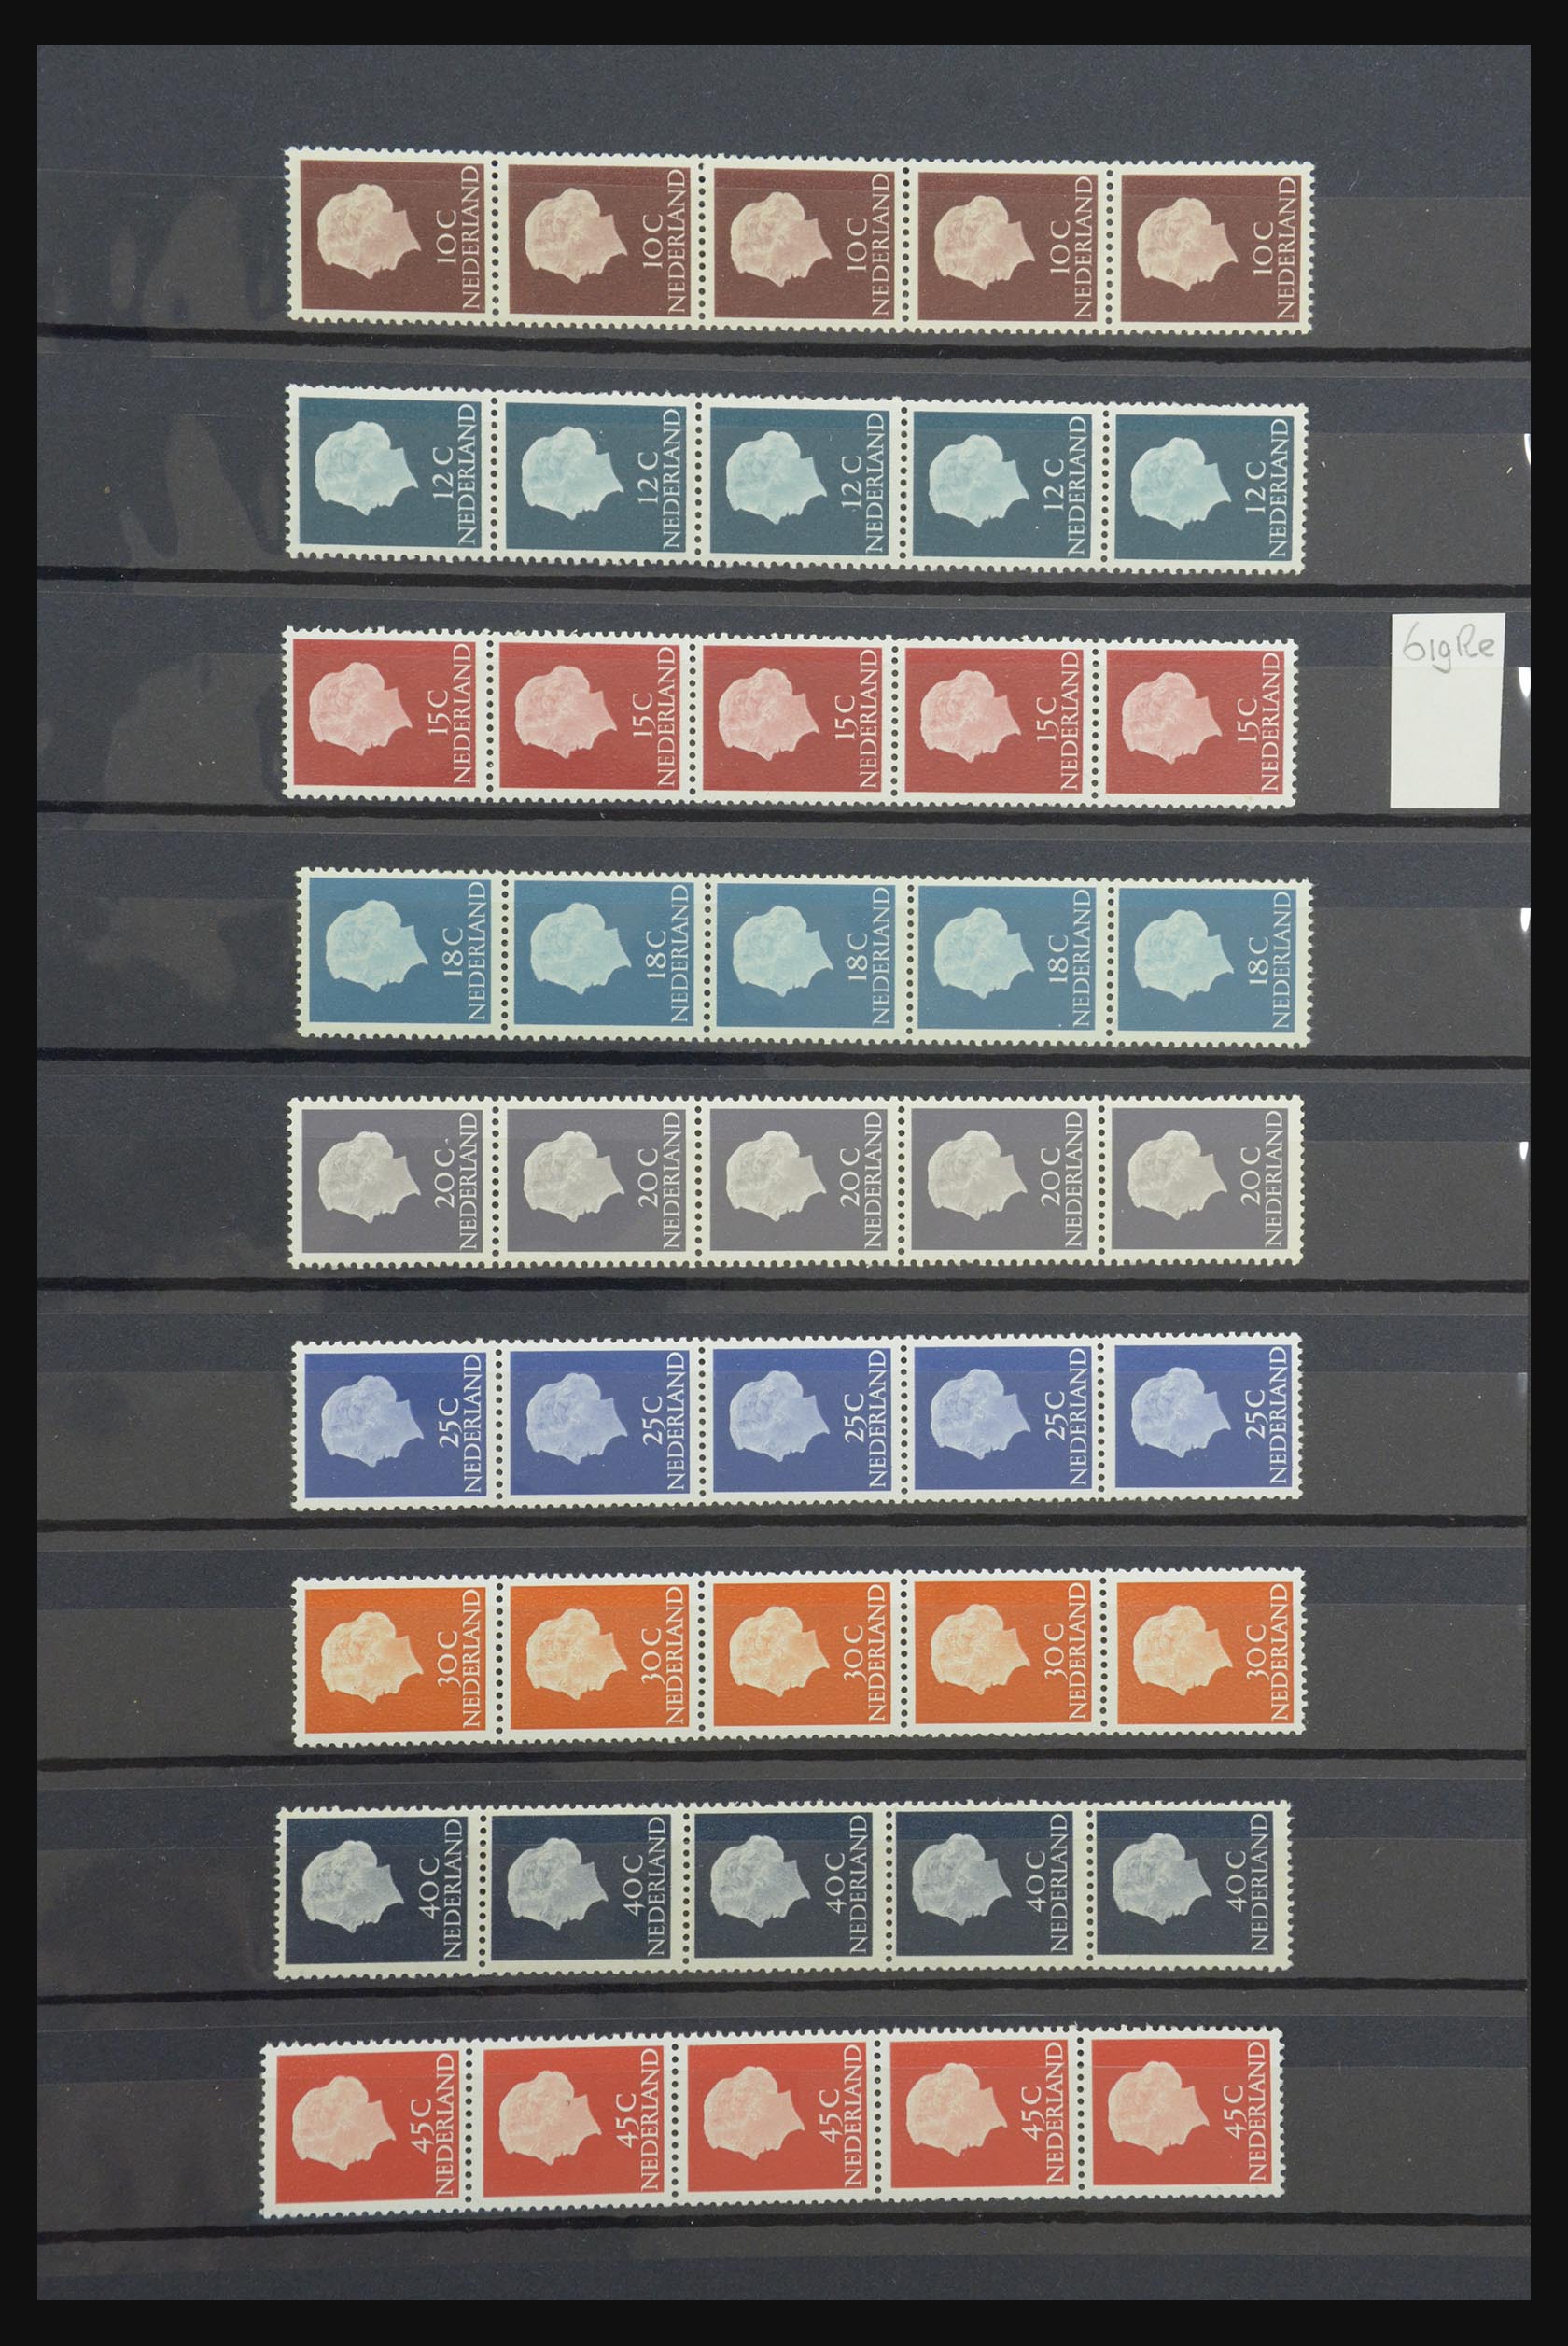 31625 005 - 31625 Nederland rolzegels 1965-2009.